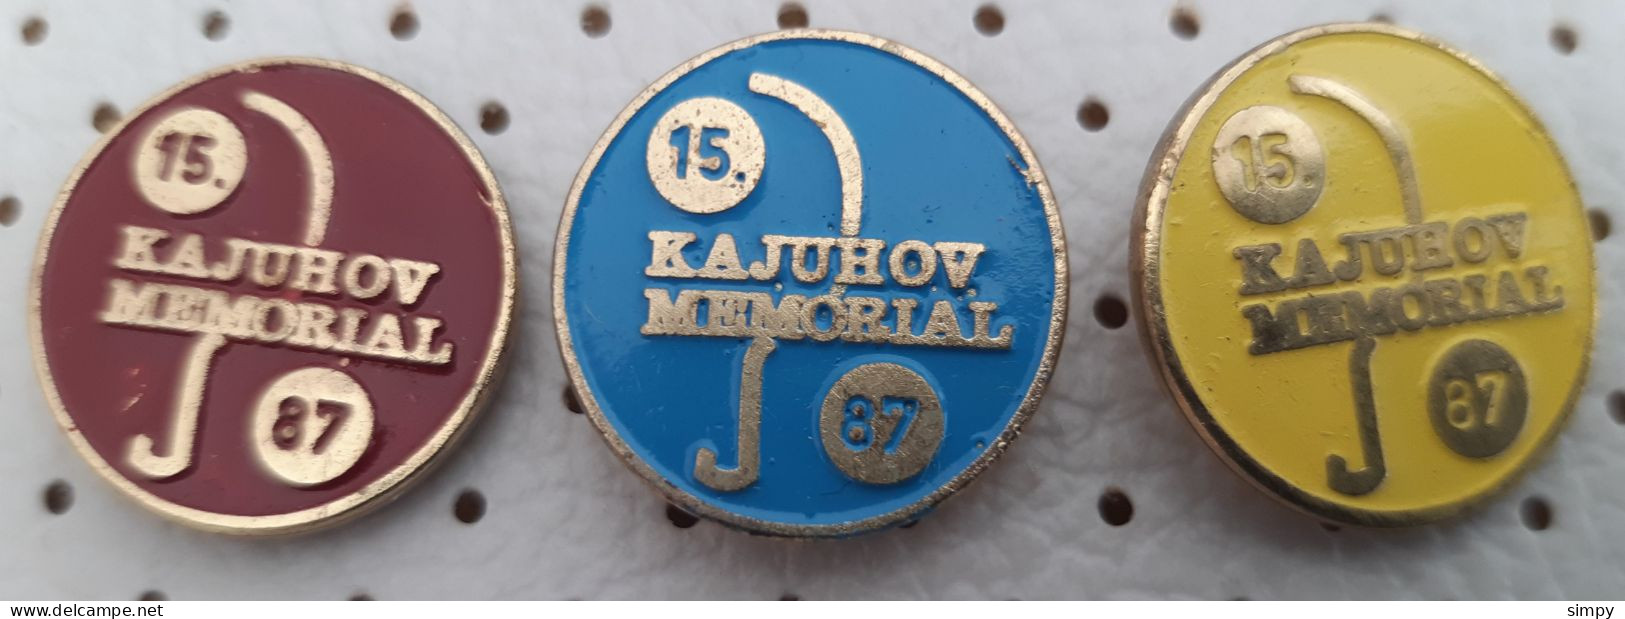 Table Tennis Tournament 15. Kajuhov Memorial  1987 Slovenia Pins Badge - Tischtennis